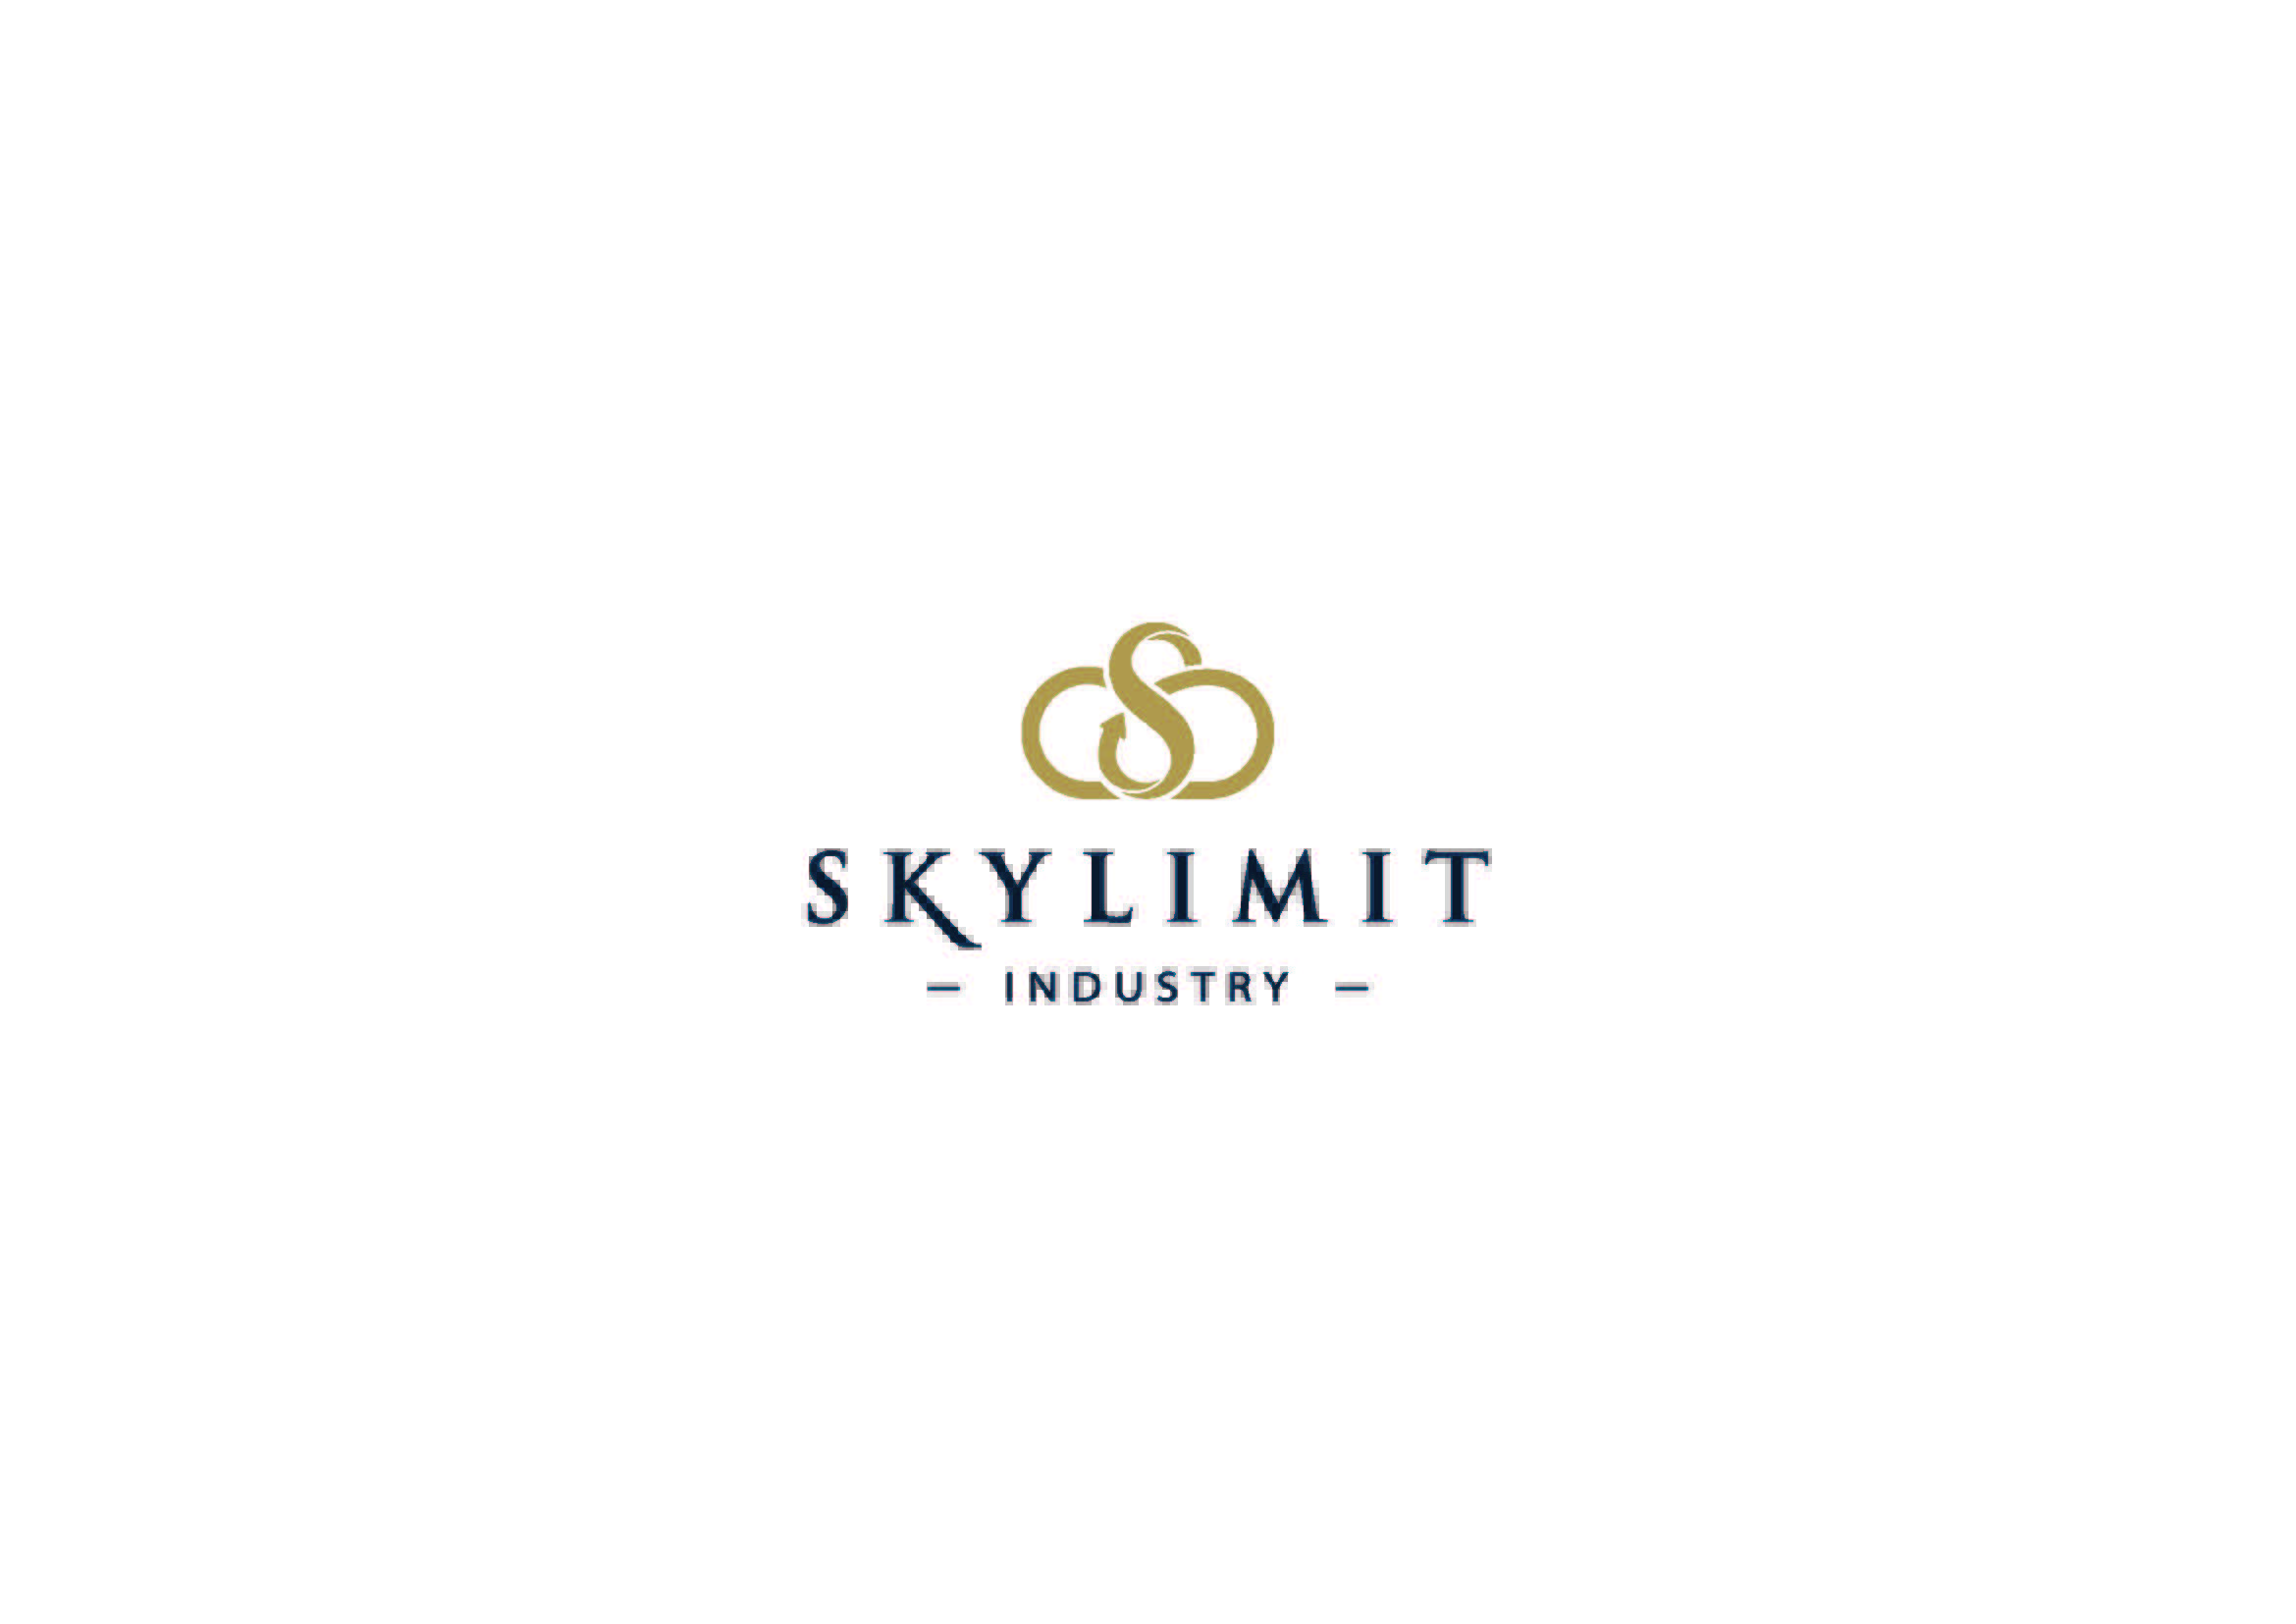 Skylimit Industry